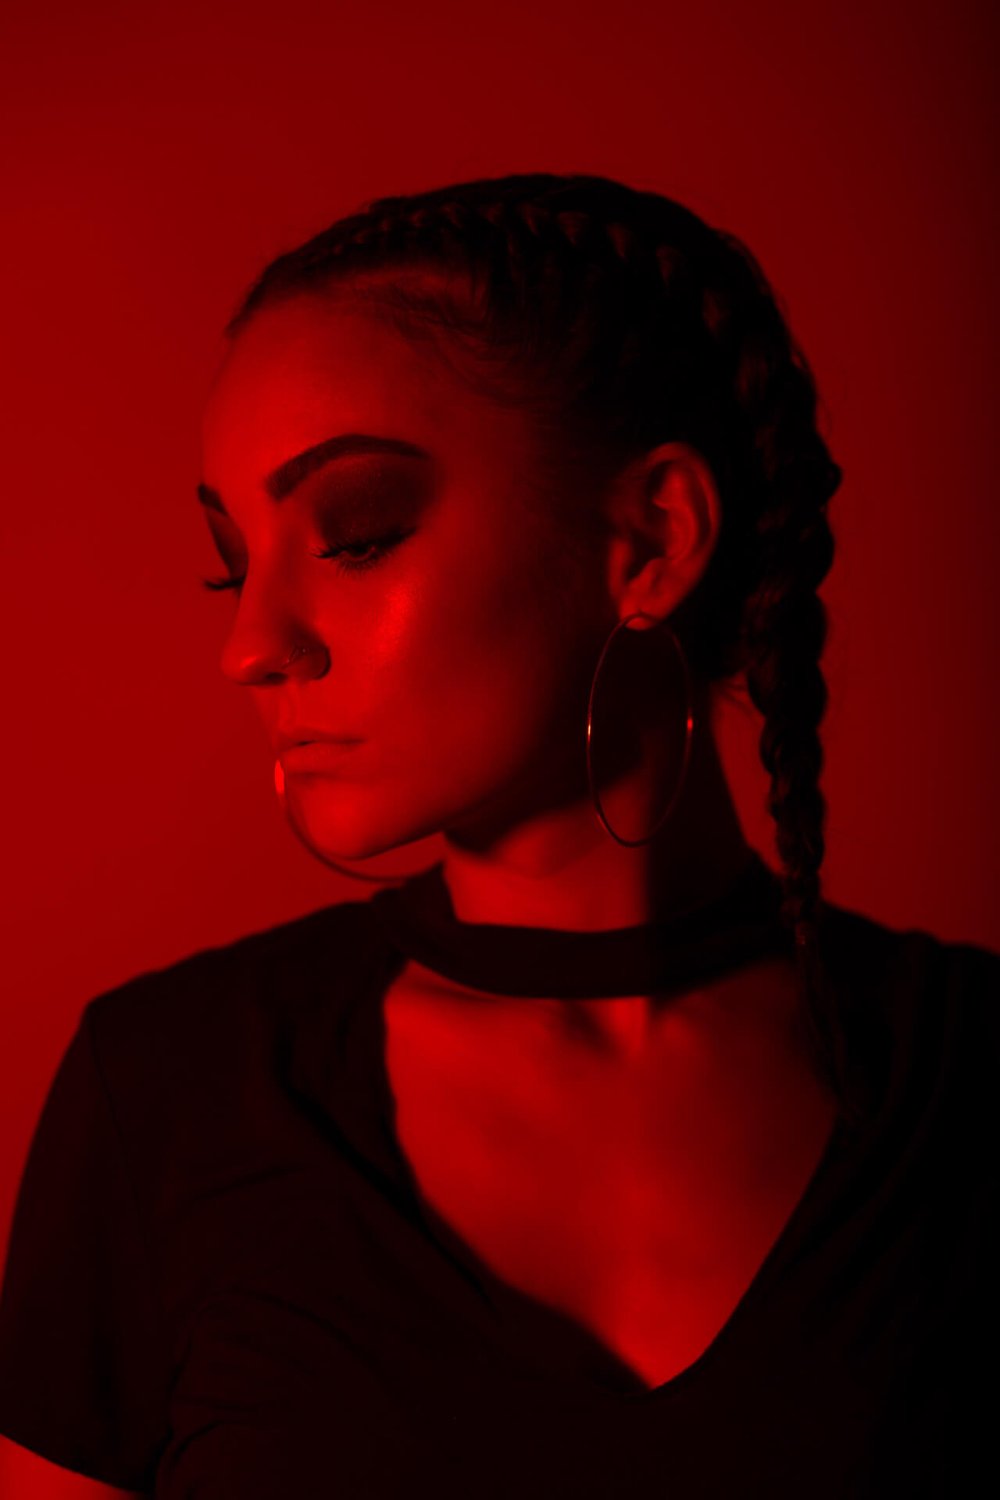 girl with braids and hoop earrings posing in red light